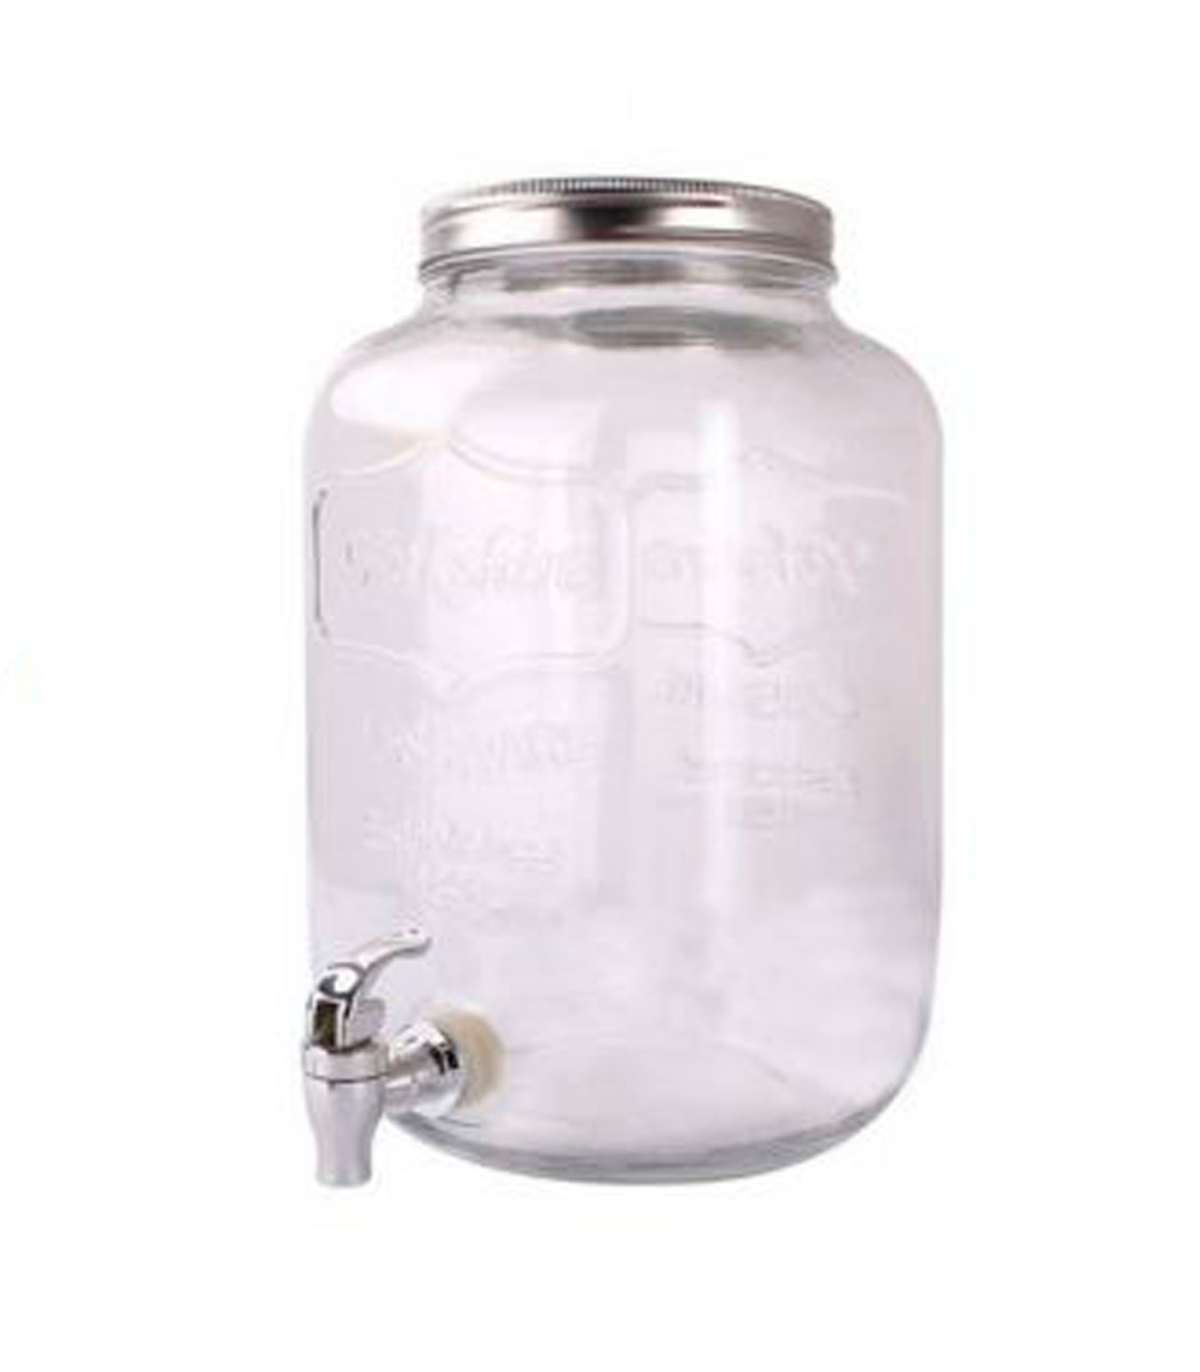 Tradineur - Jarra de cristal para servir agua, bebidas frías